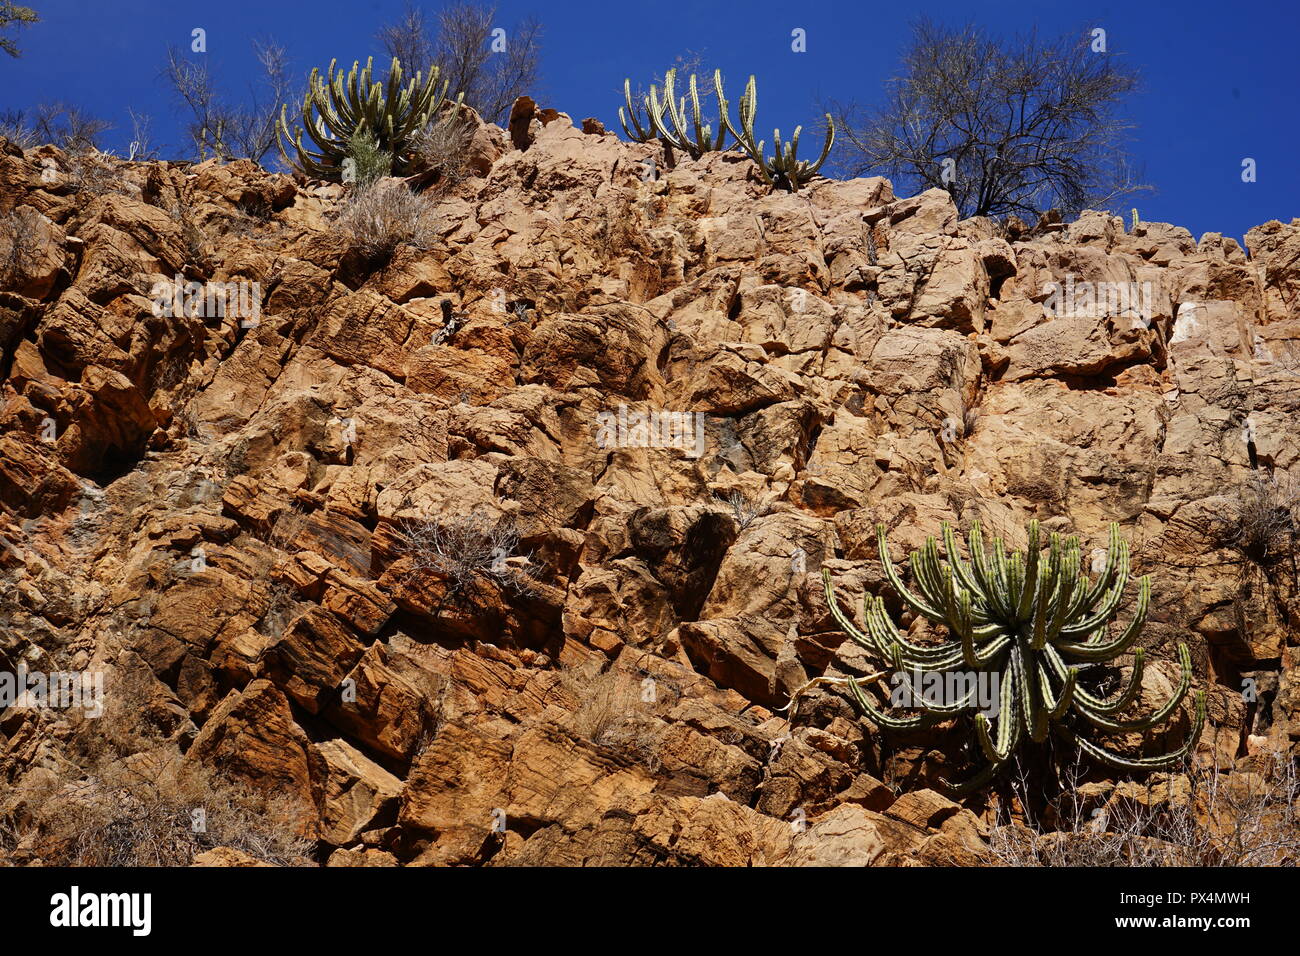 Felswand in einer Schlucht, OliveTrail, Naukluft Gebirge, Parco Namib-Naukluft, Namibia, Afrika / Namib-Naukluft National Park Foto Stock